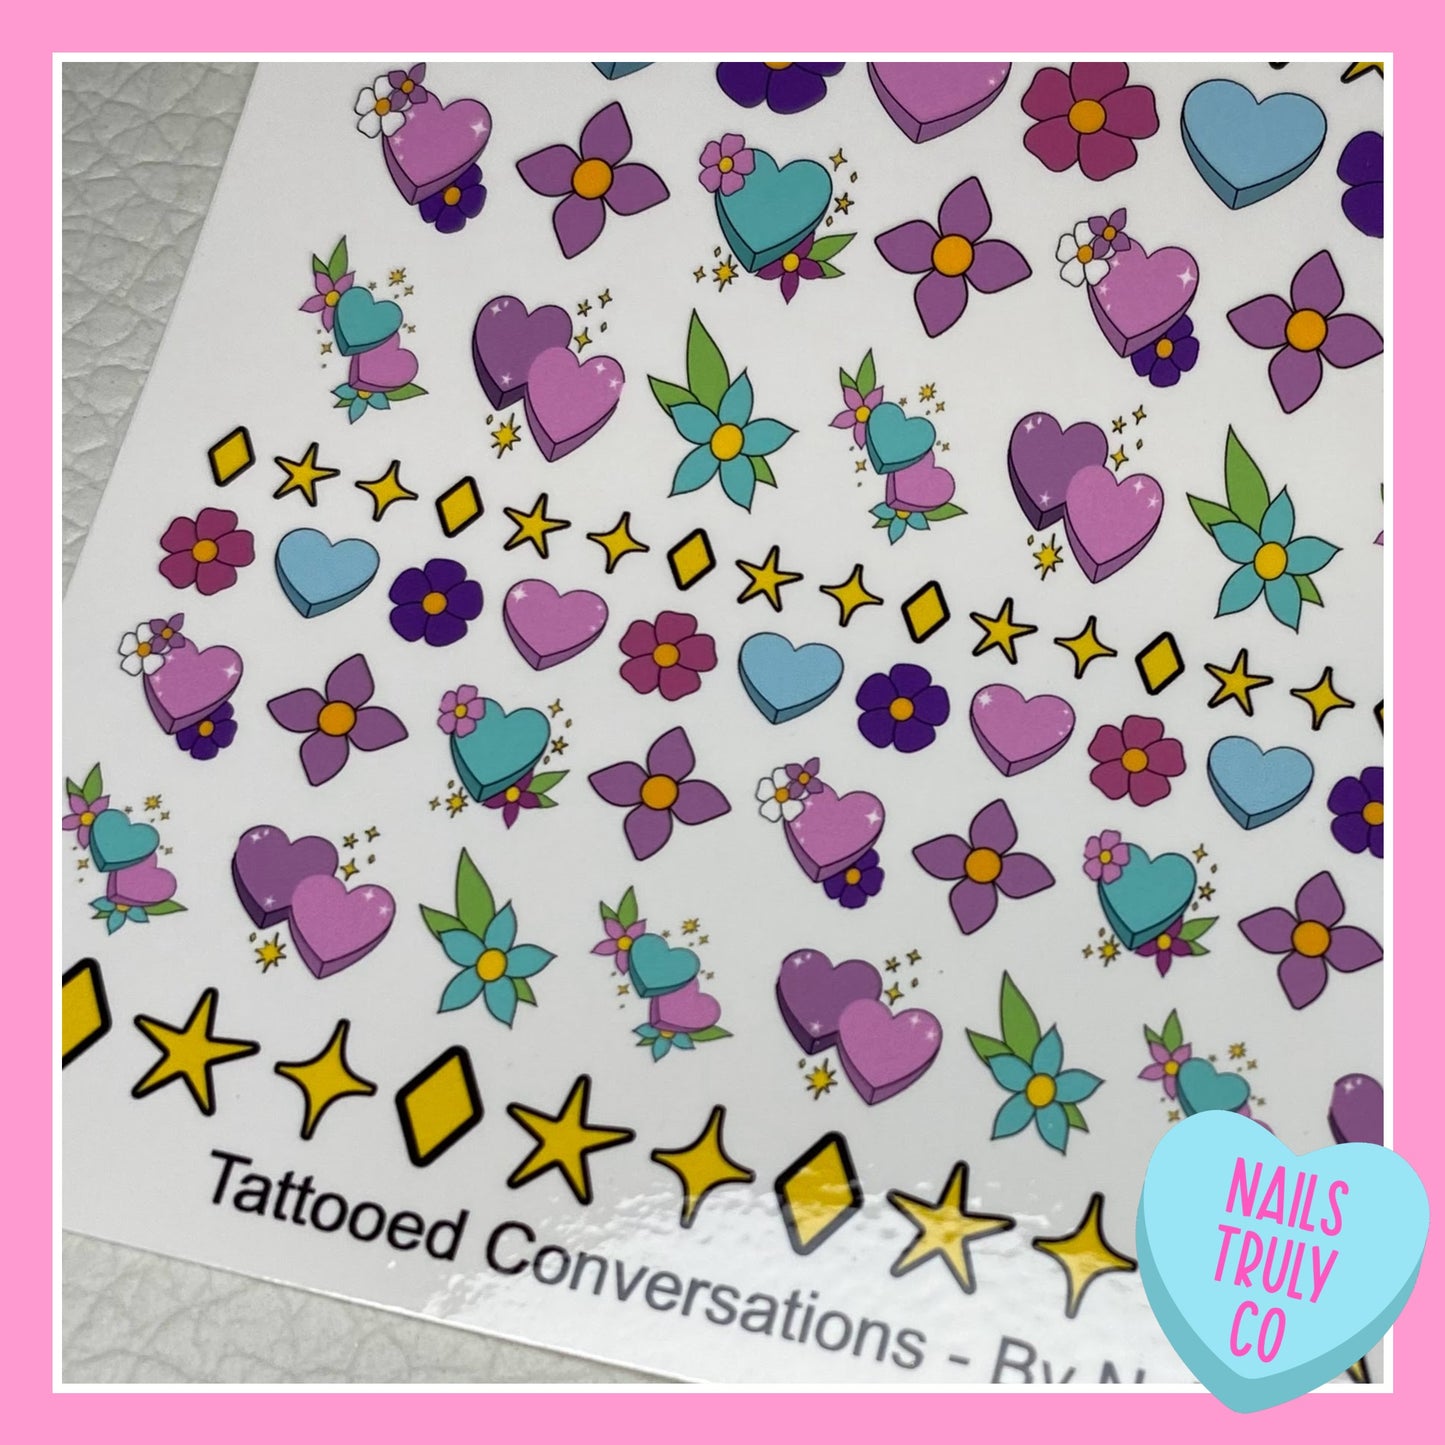 Conversation Hearts- Tattooed Conversations